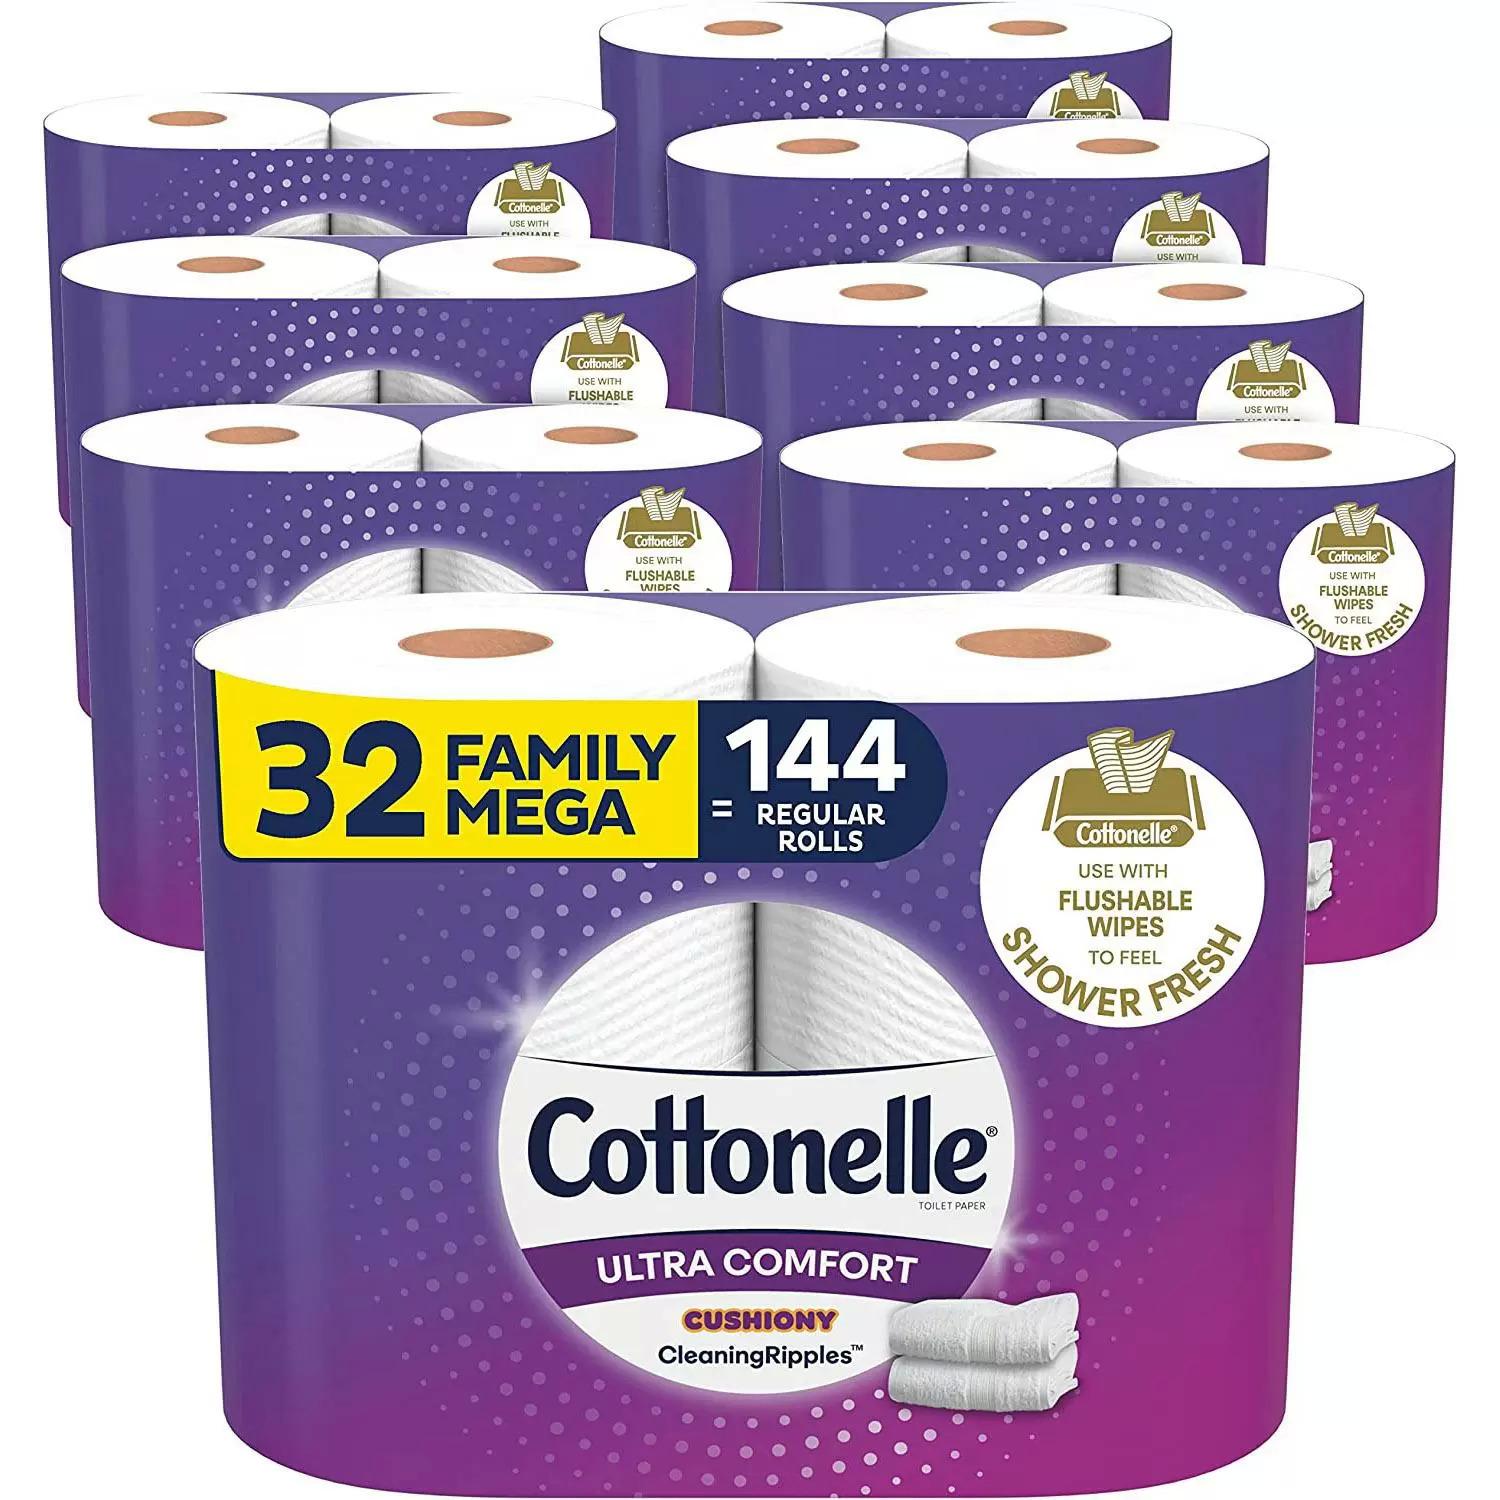 32 Cottonelle Ultra Comfort Family Mega Rolls Toilet Paper for $22.61 Shipped